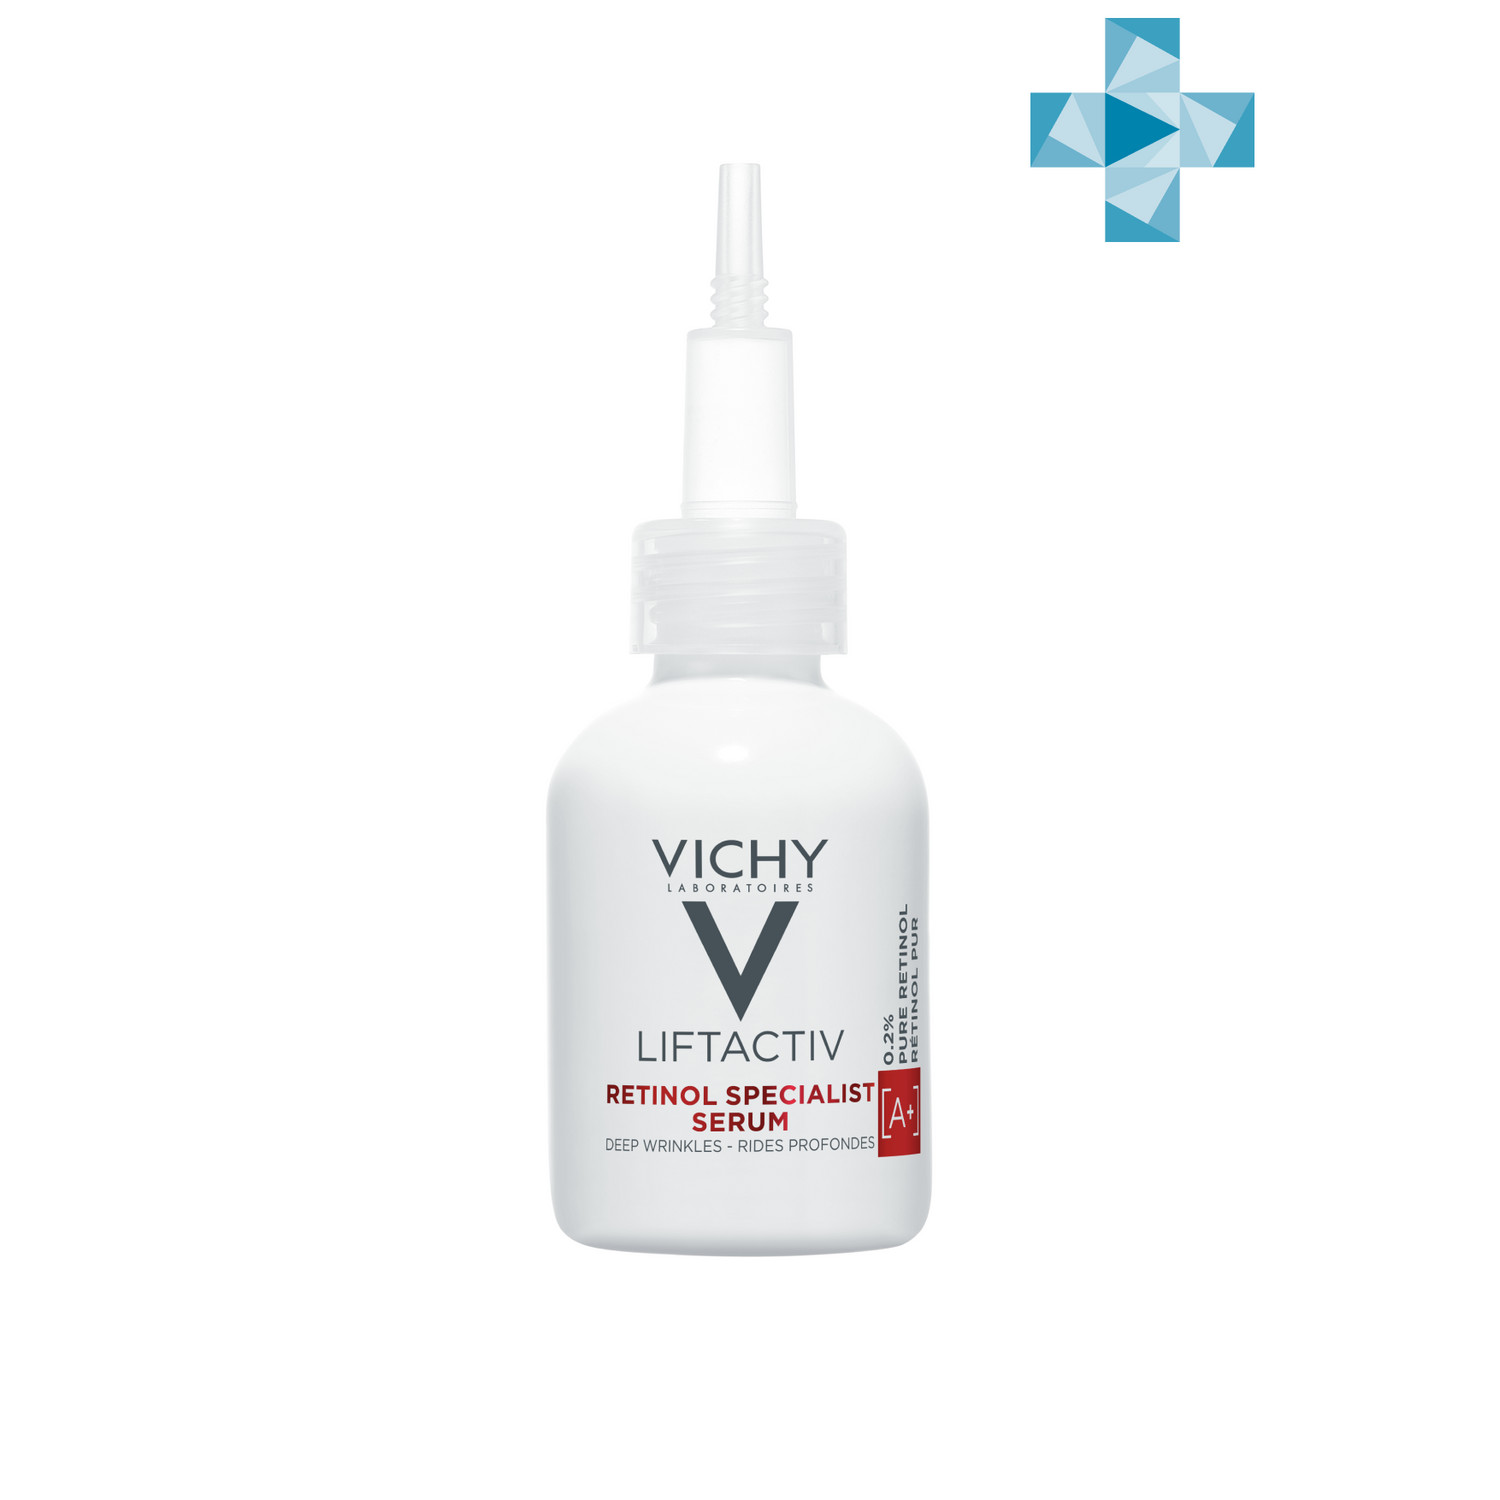 Vichy Сыворотка для коррекции глубоких морщин Retinol Specialist, 30 мл (Vichy, Liftactiv) сыворотка для коррекции глубоких морщин retinol specialist liftactiv vichy виши фл 30мл